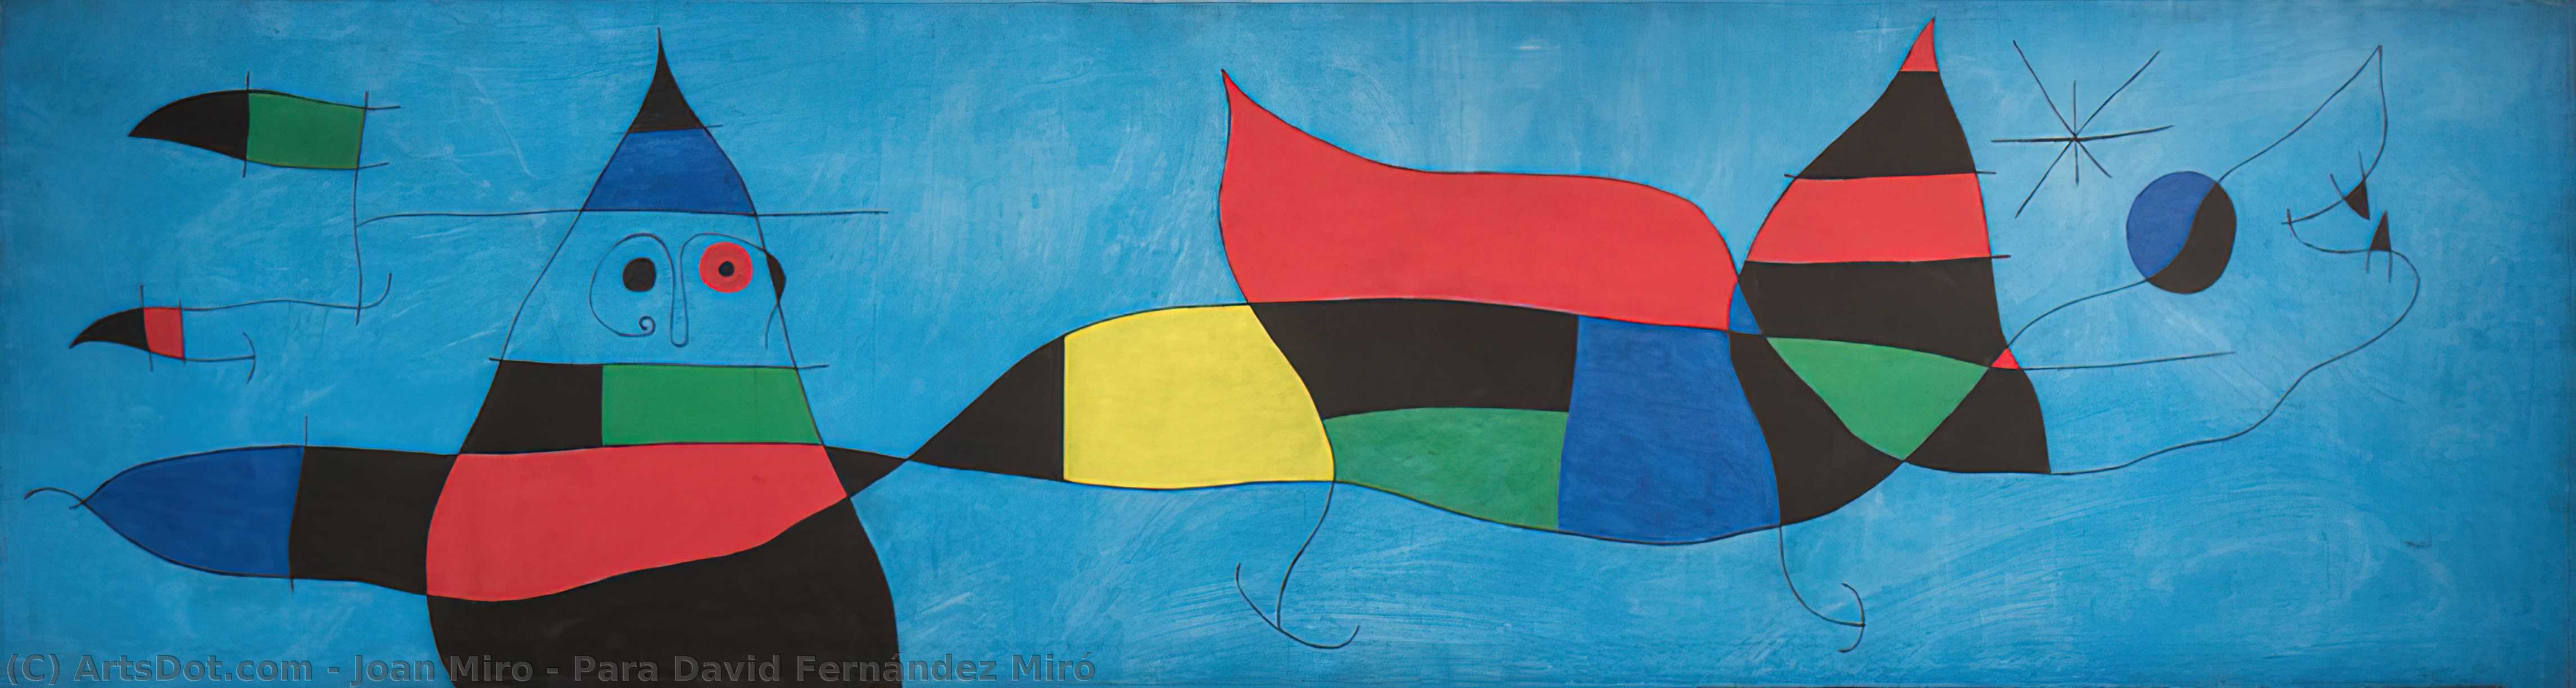 Wikioo.org - สารานุกรมวิจิตรศิลป์ - จิตรกรรม Joan Miro - Para David Fernández Miró